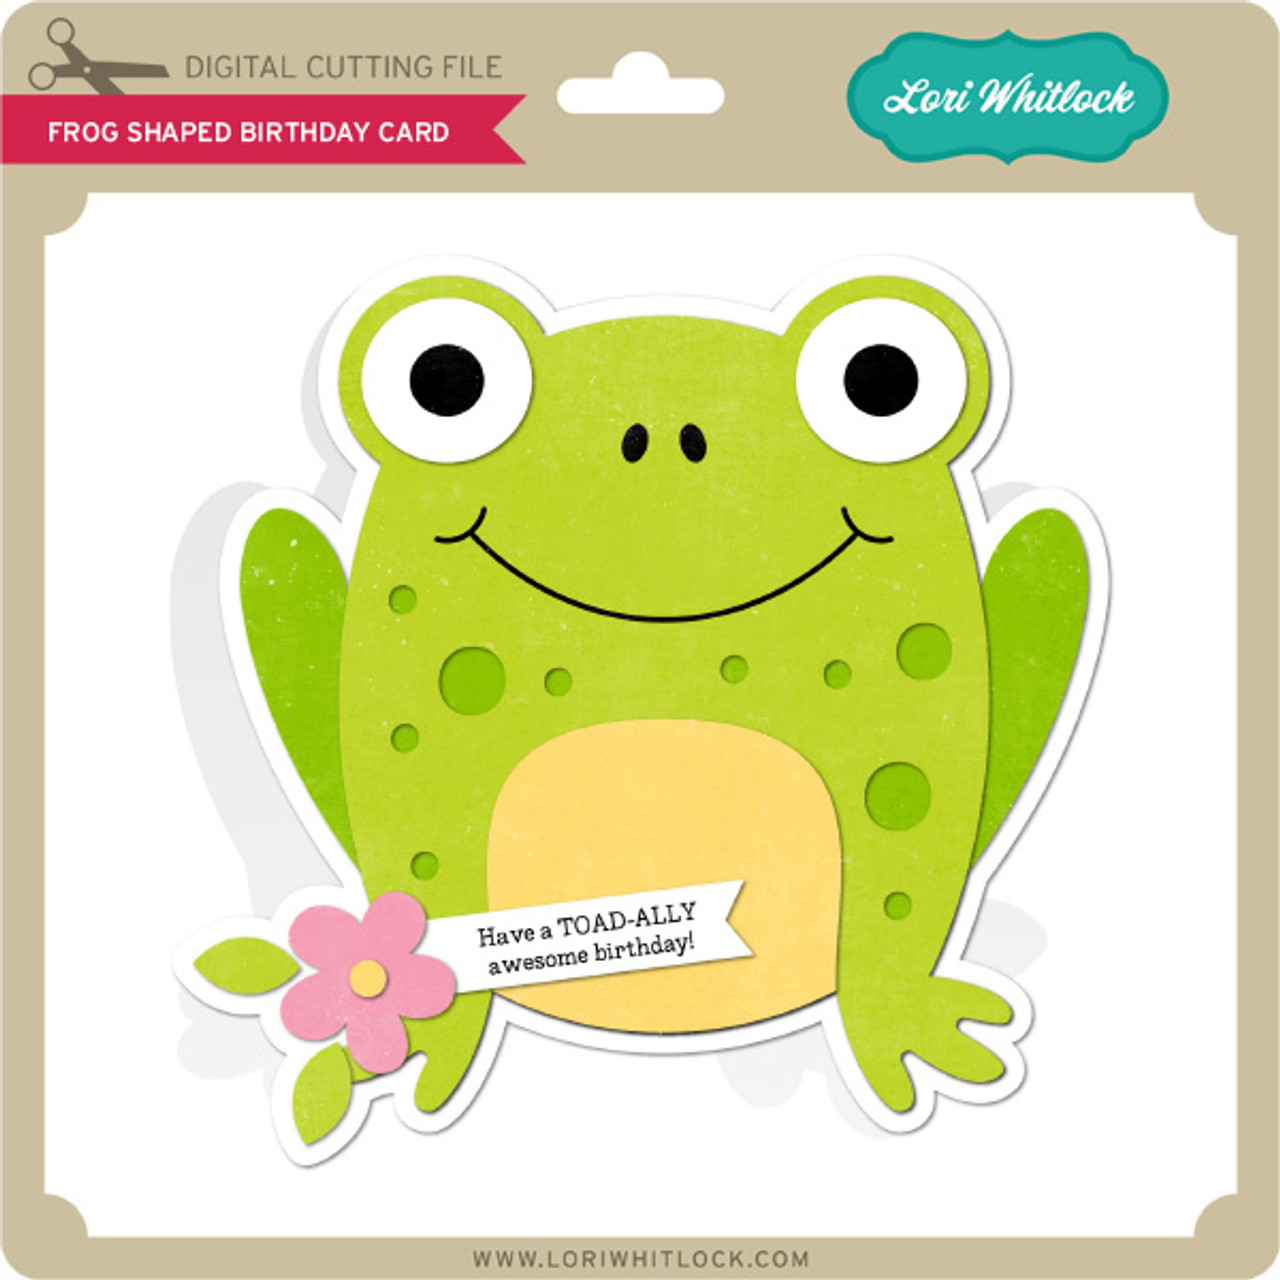 Cute Santa Hat Frog Hoppy Christmas Gift Tags - Printable